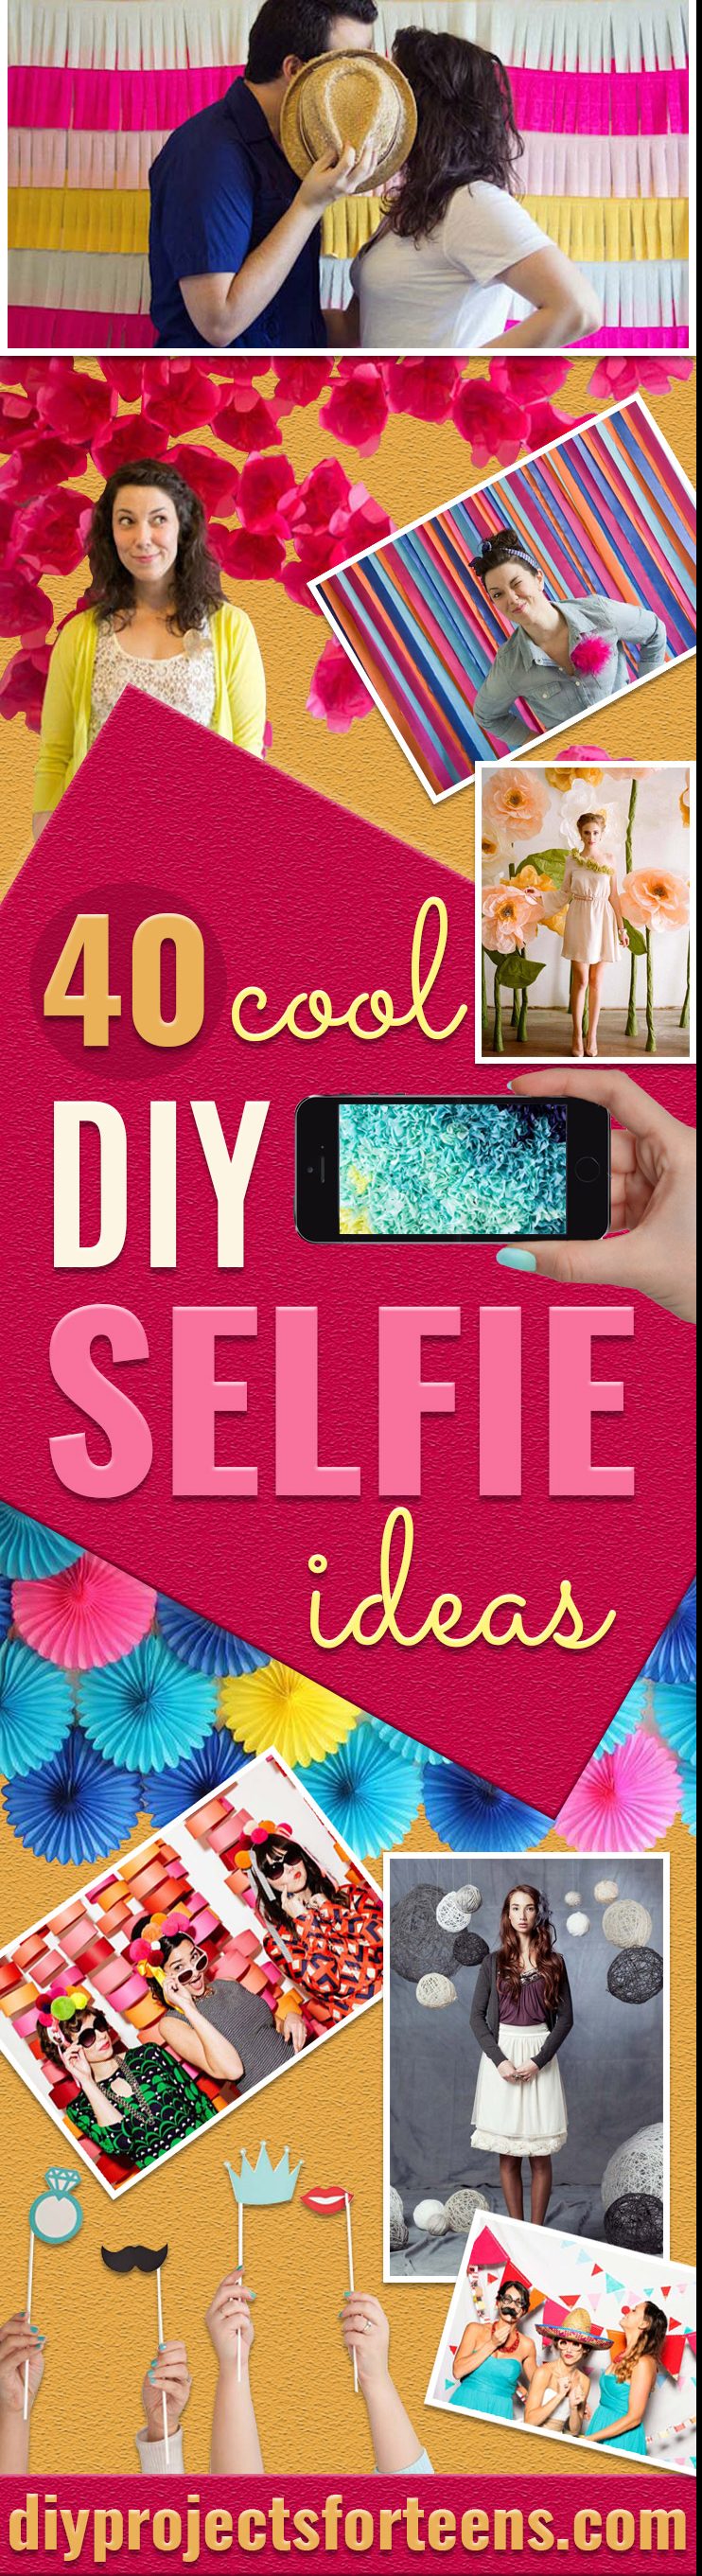 40 Super Cool DIY Selfie ideas